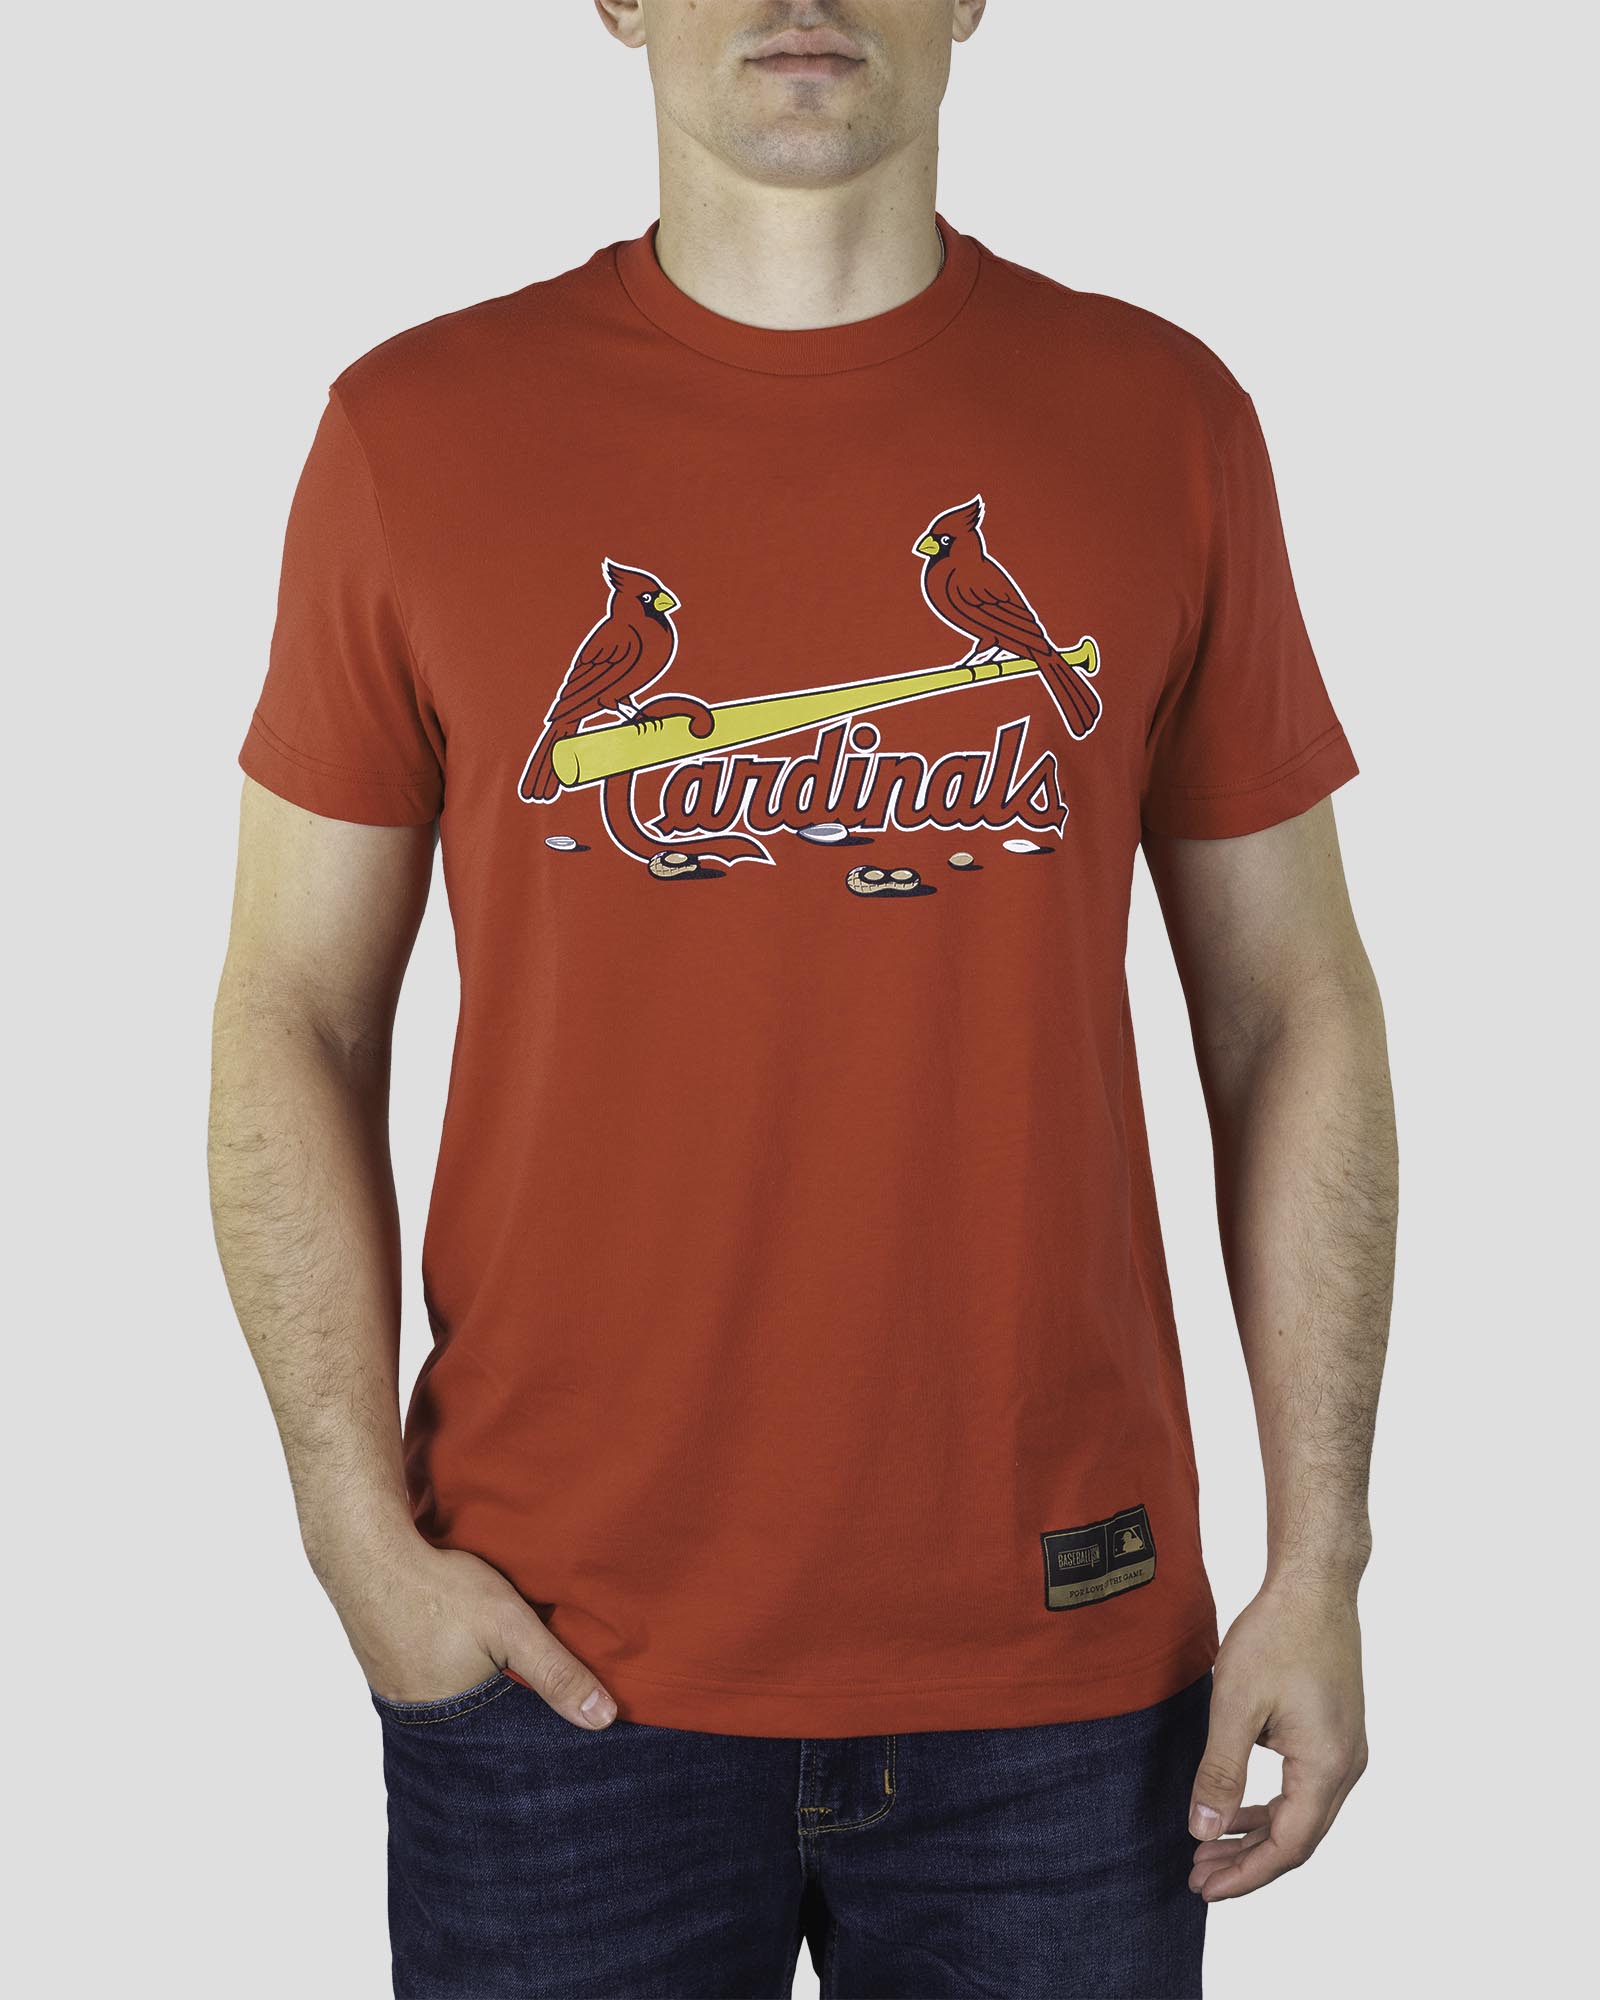 St. Louis Cardinals Size 3XL MLB Fan Jerseys for sale